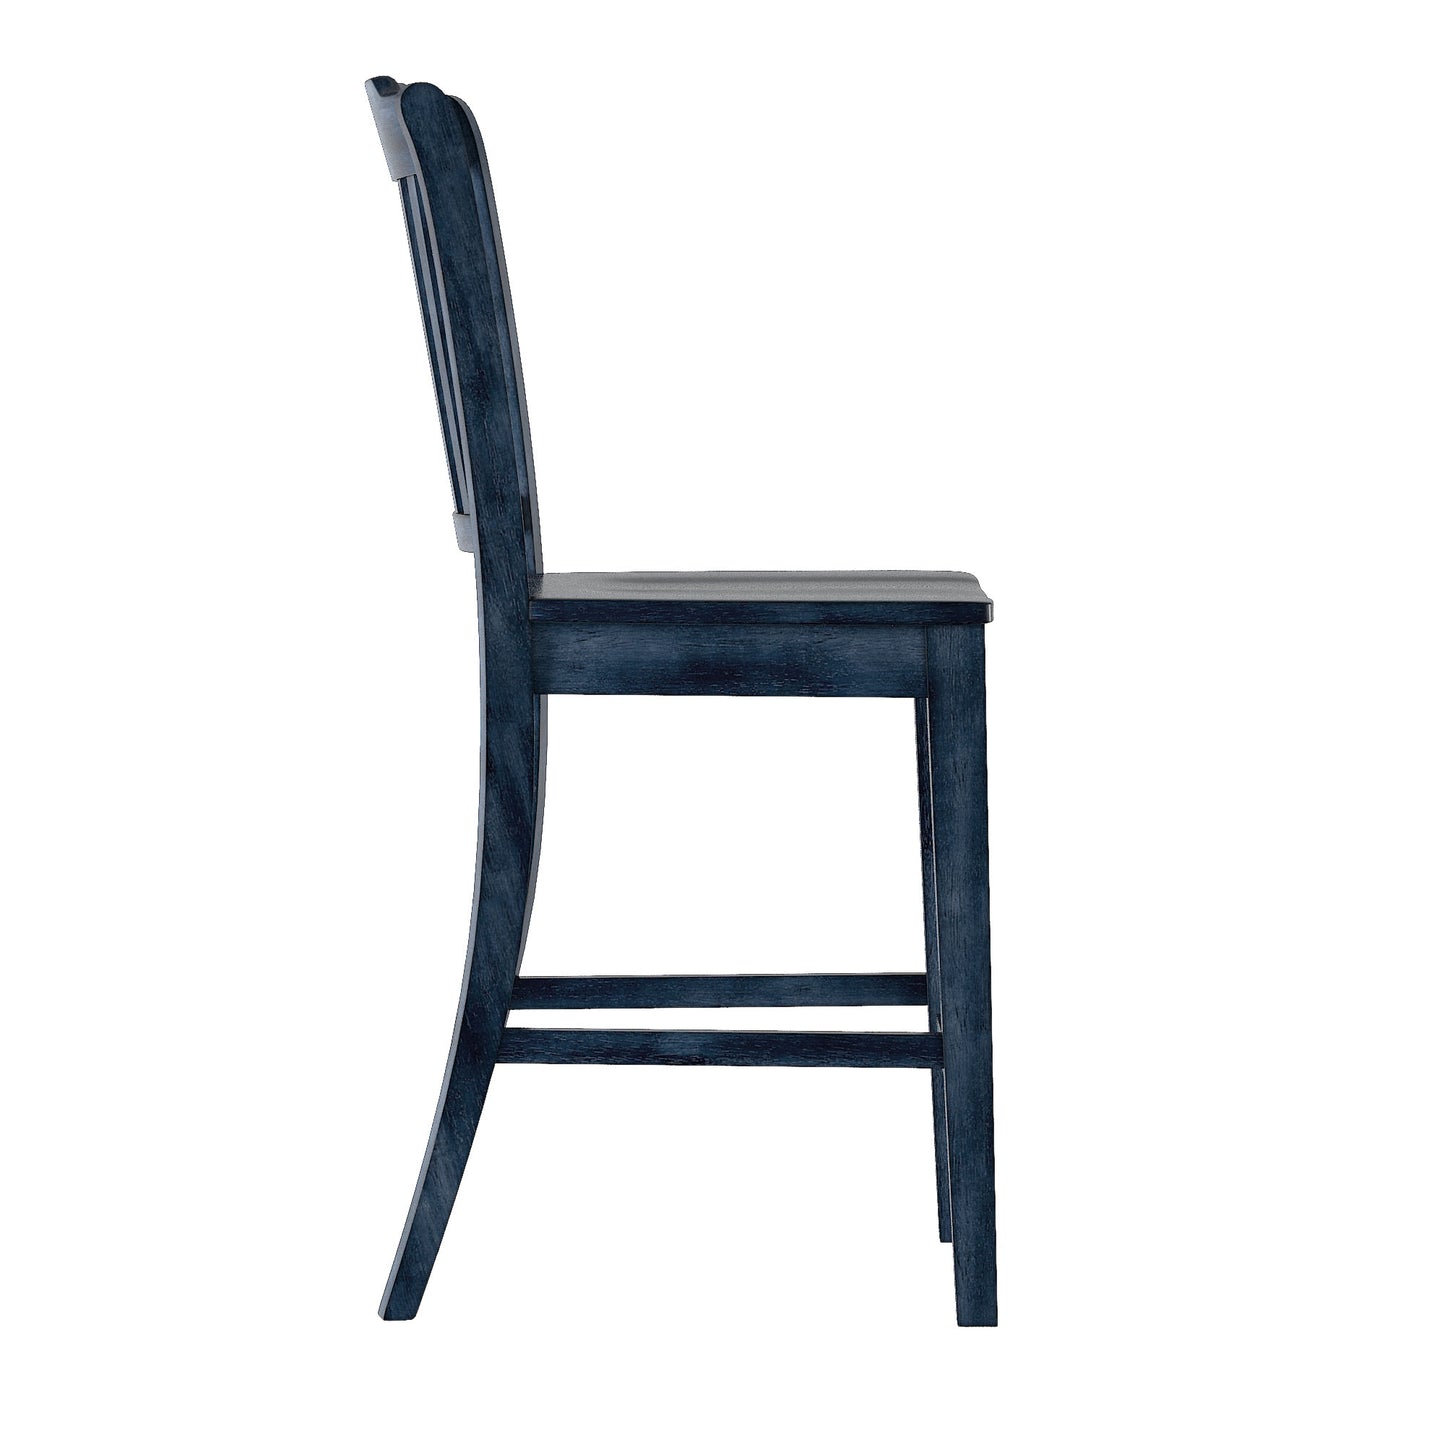 Slat Back Wood Counter Height Chairs (Set of 2) - Antique Dark Denim Finish